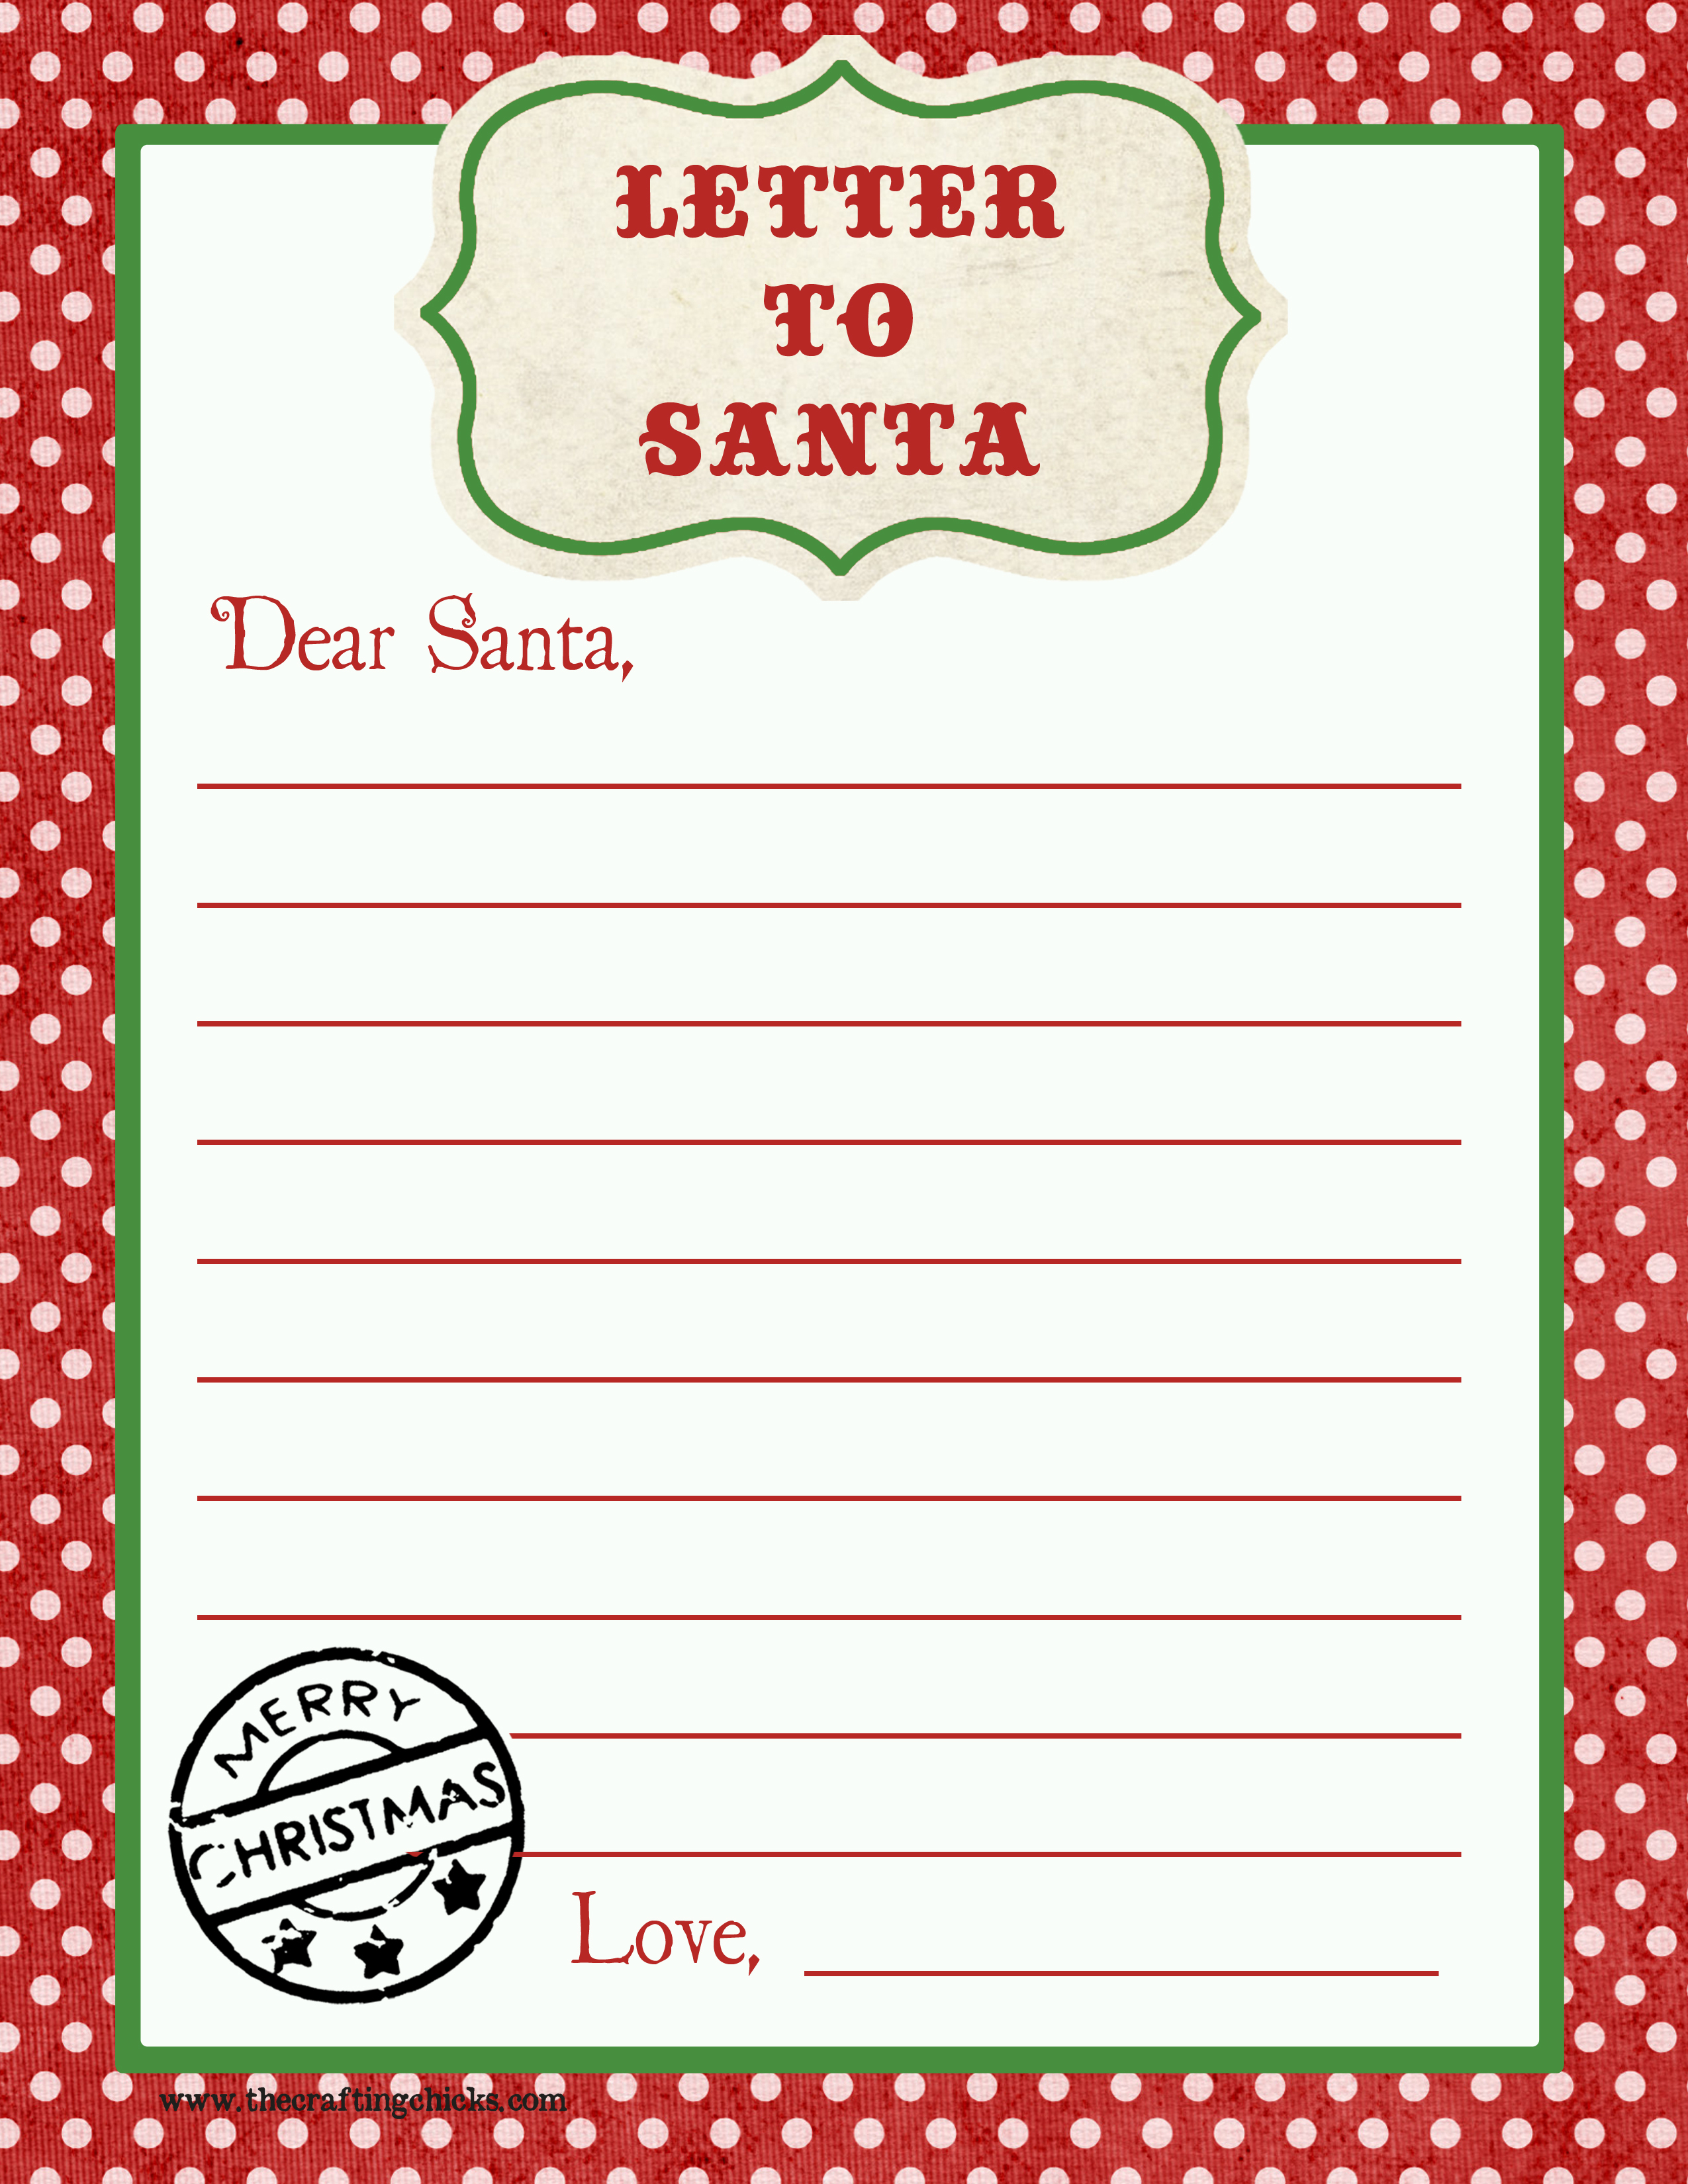 Letter To Santa Free Printable Download - Letter To Santa Template Free Printable